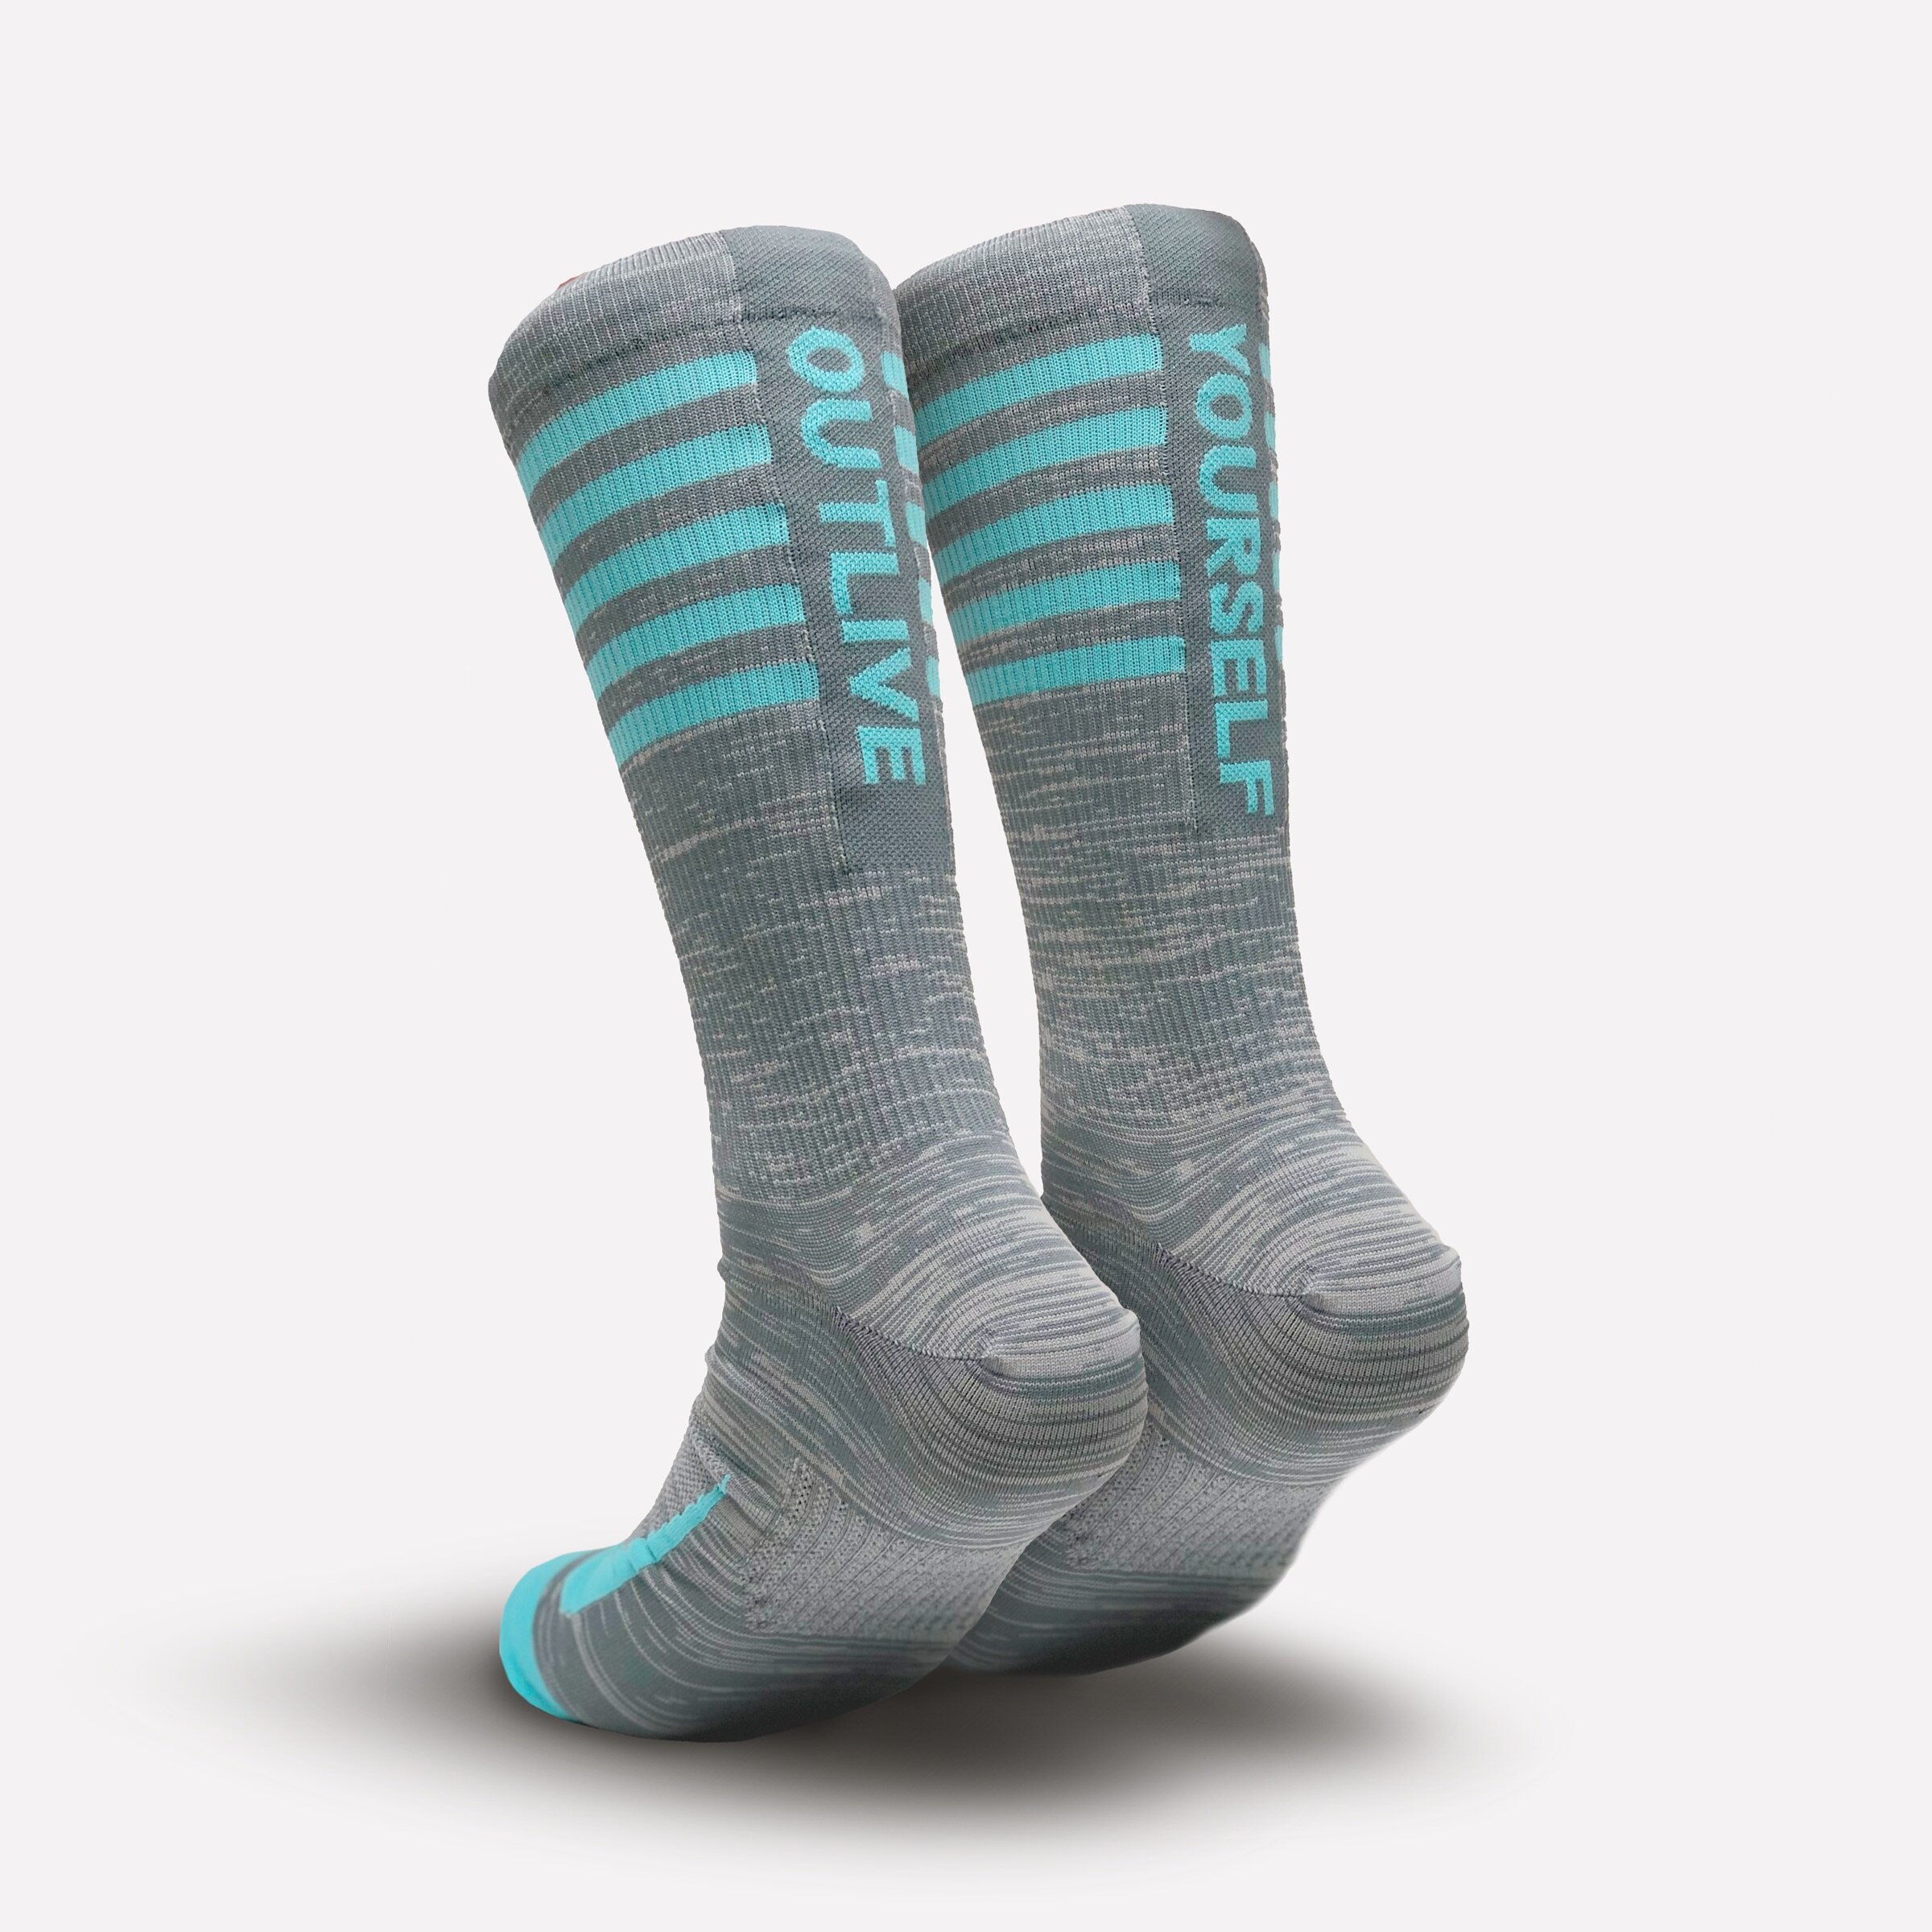 OYF - Nike full shot of both socks copy.jpg